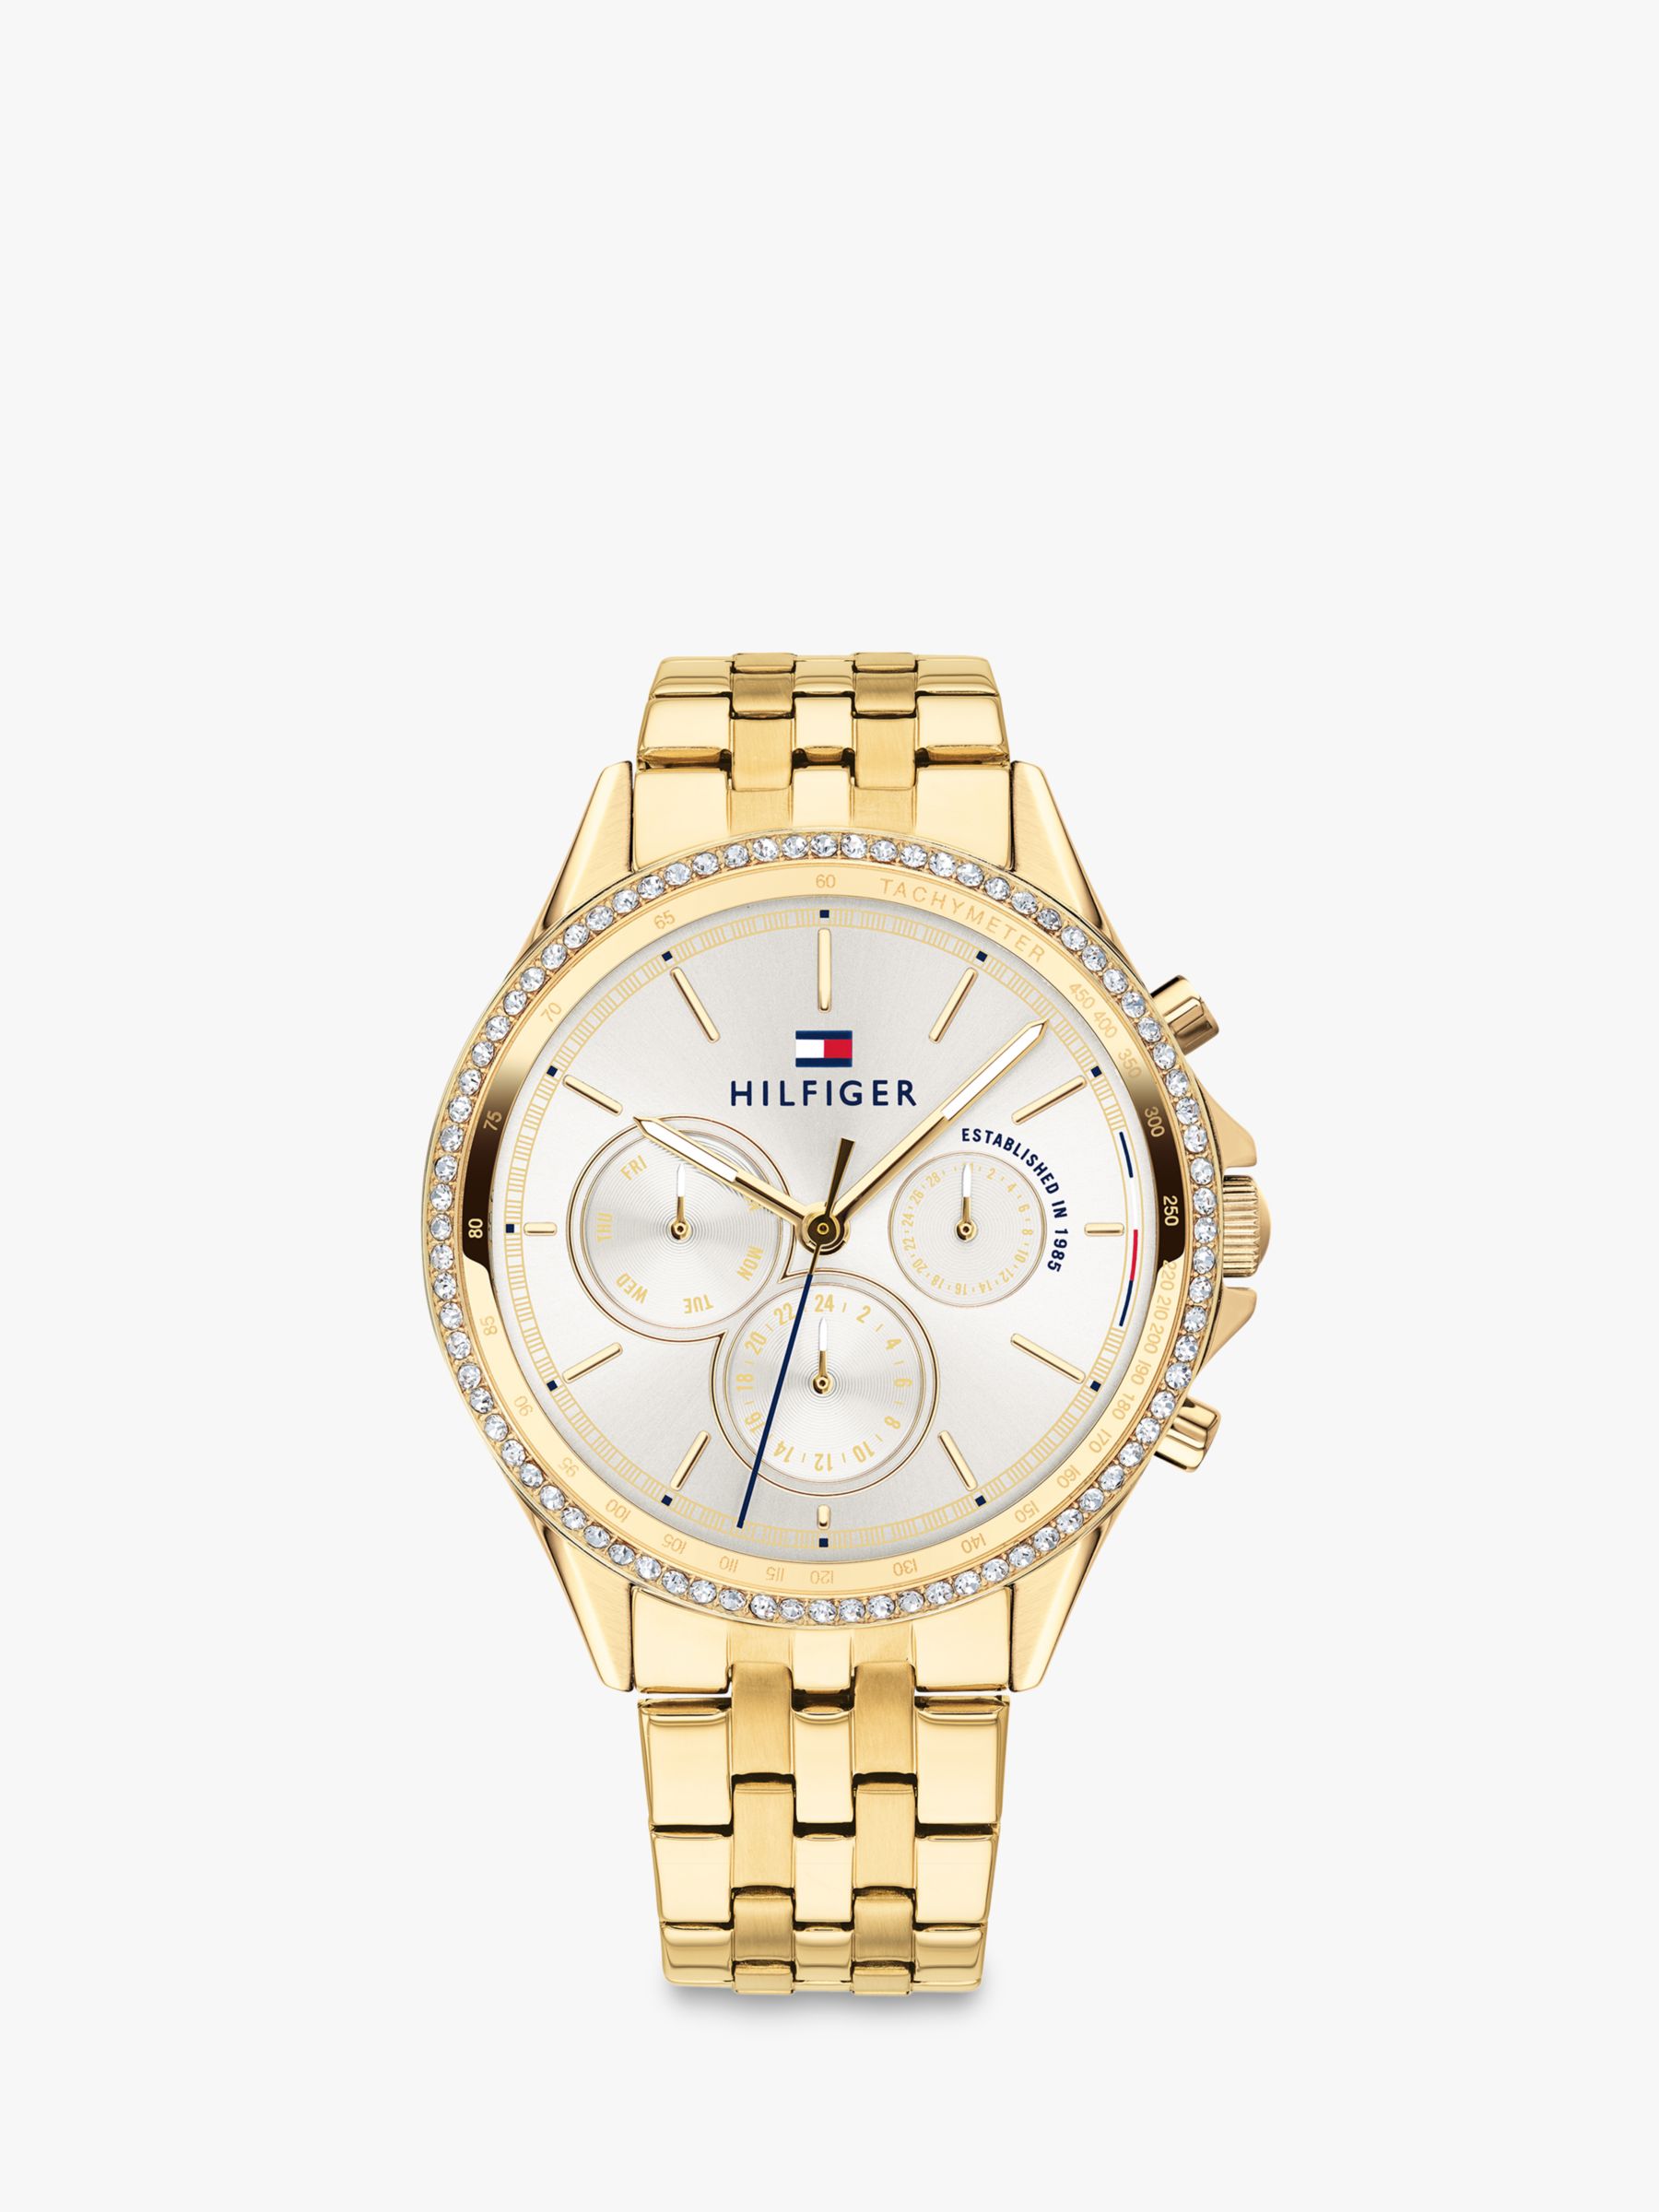 Hilfiger Women's Chronograph Watch, Gold/White 1781977 at John Lewis & Partners